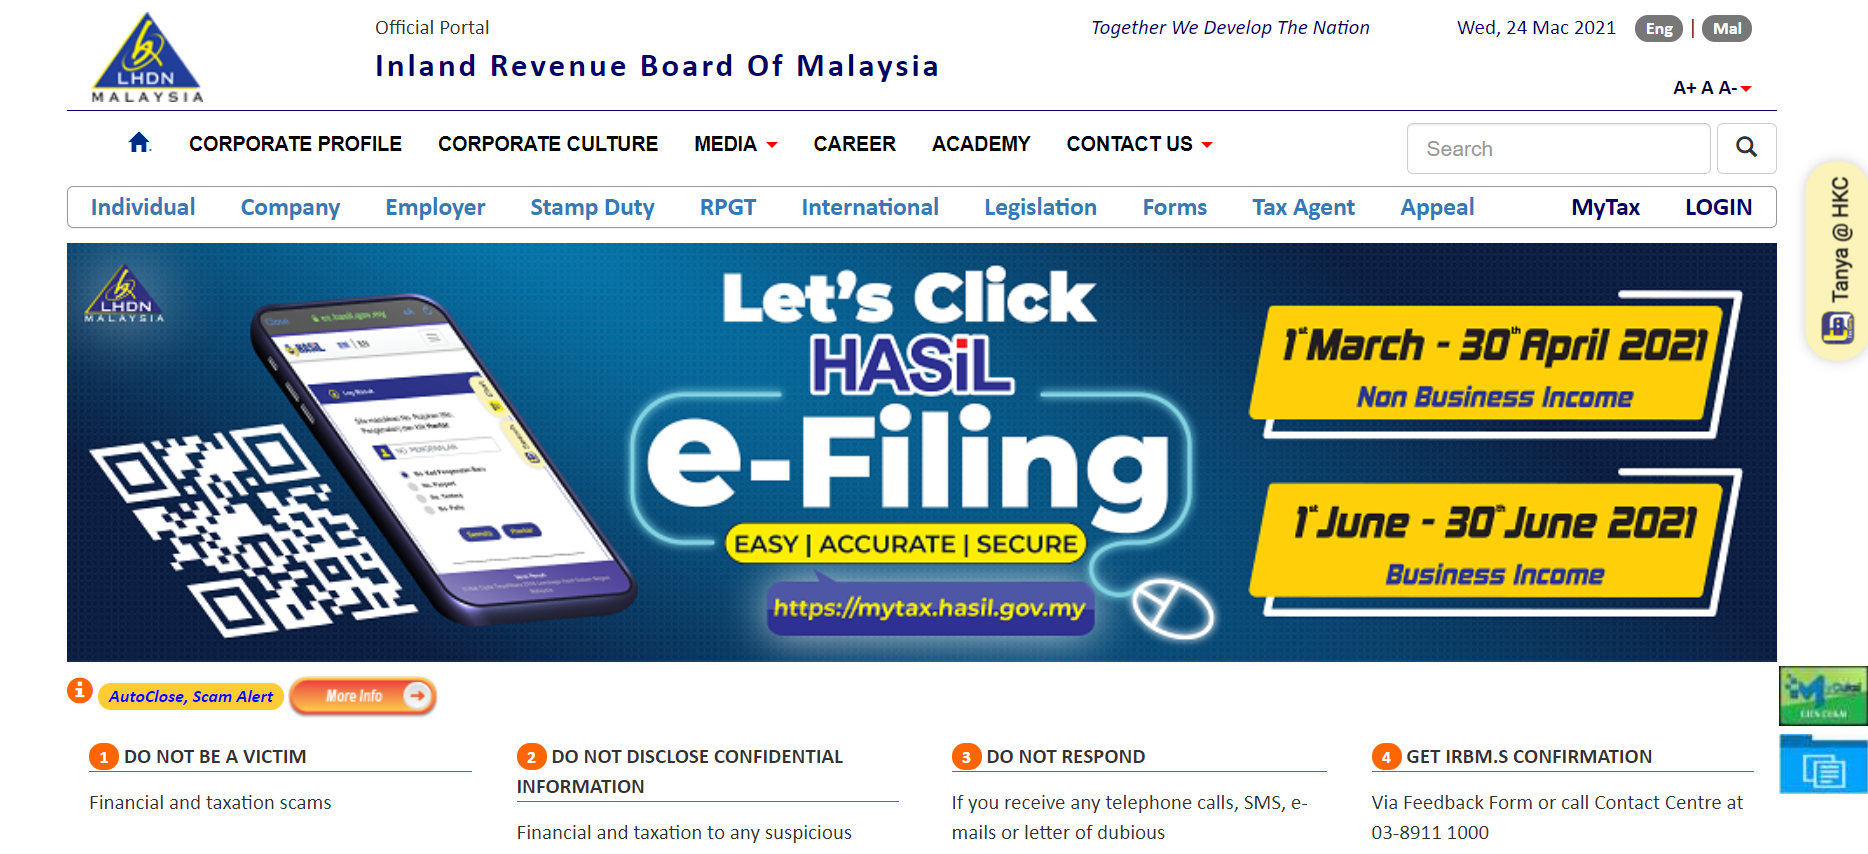 Personal tax filing deadline 2021 malaysia